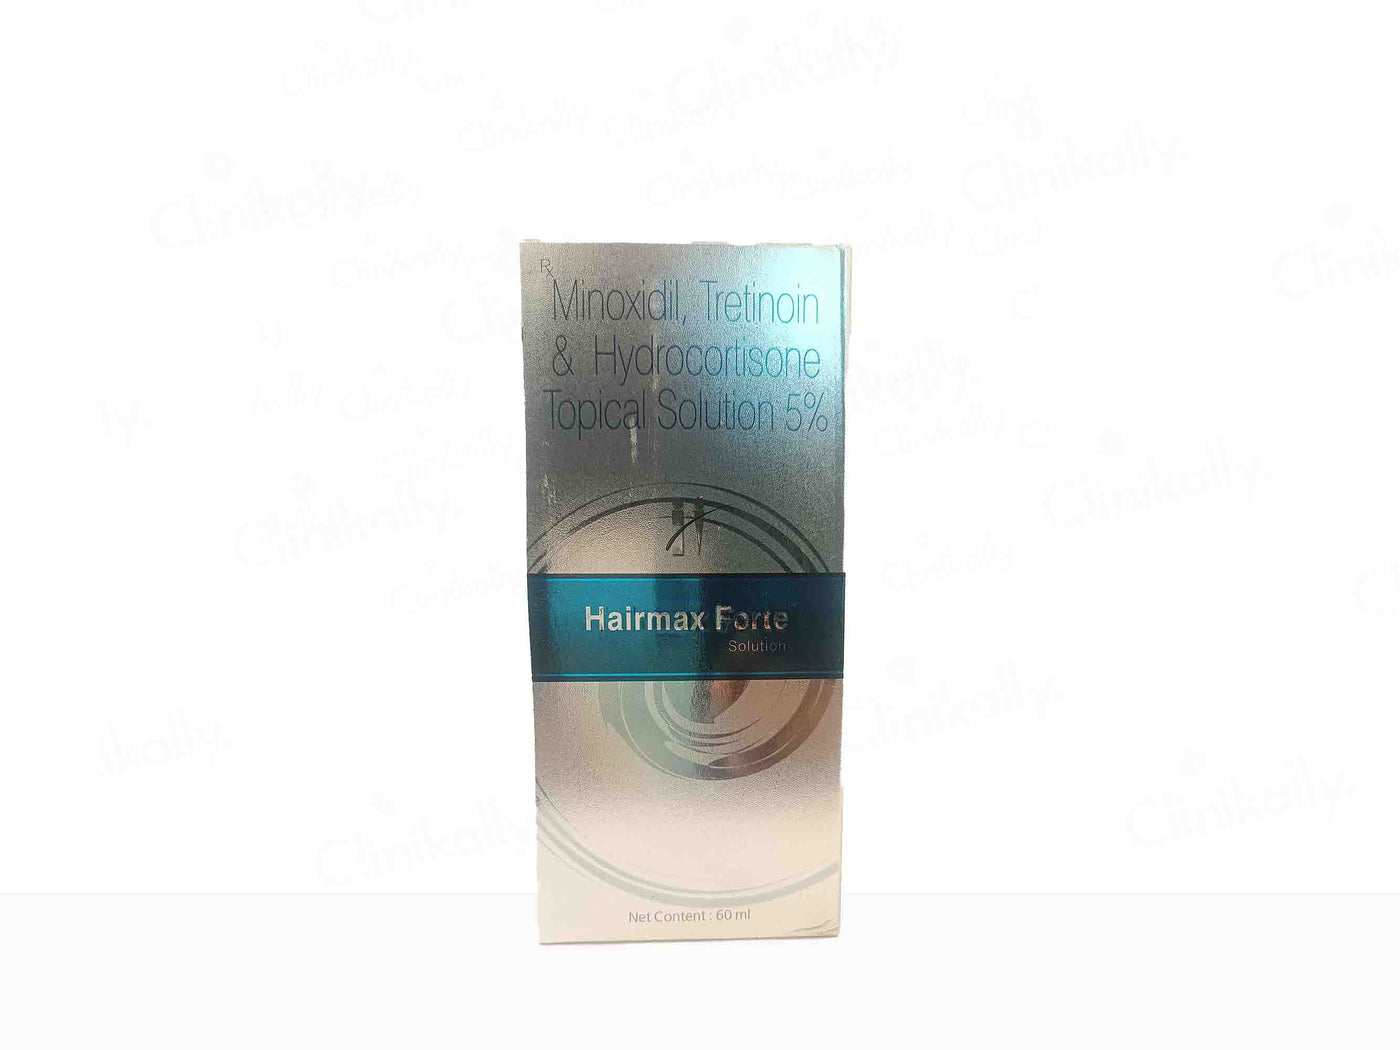 Hairmax Forte Topical Solution - Clinikally